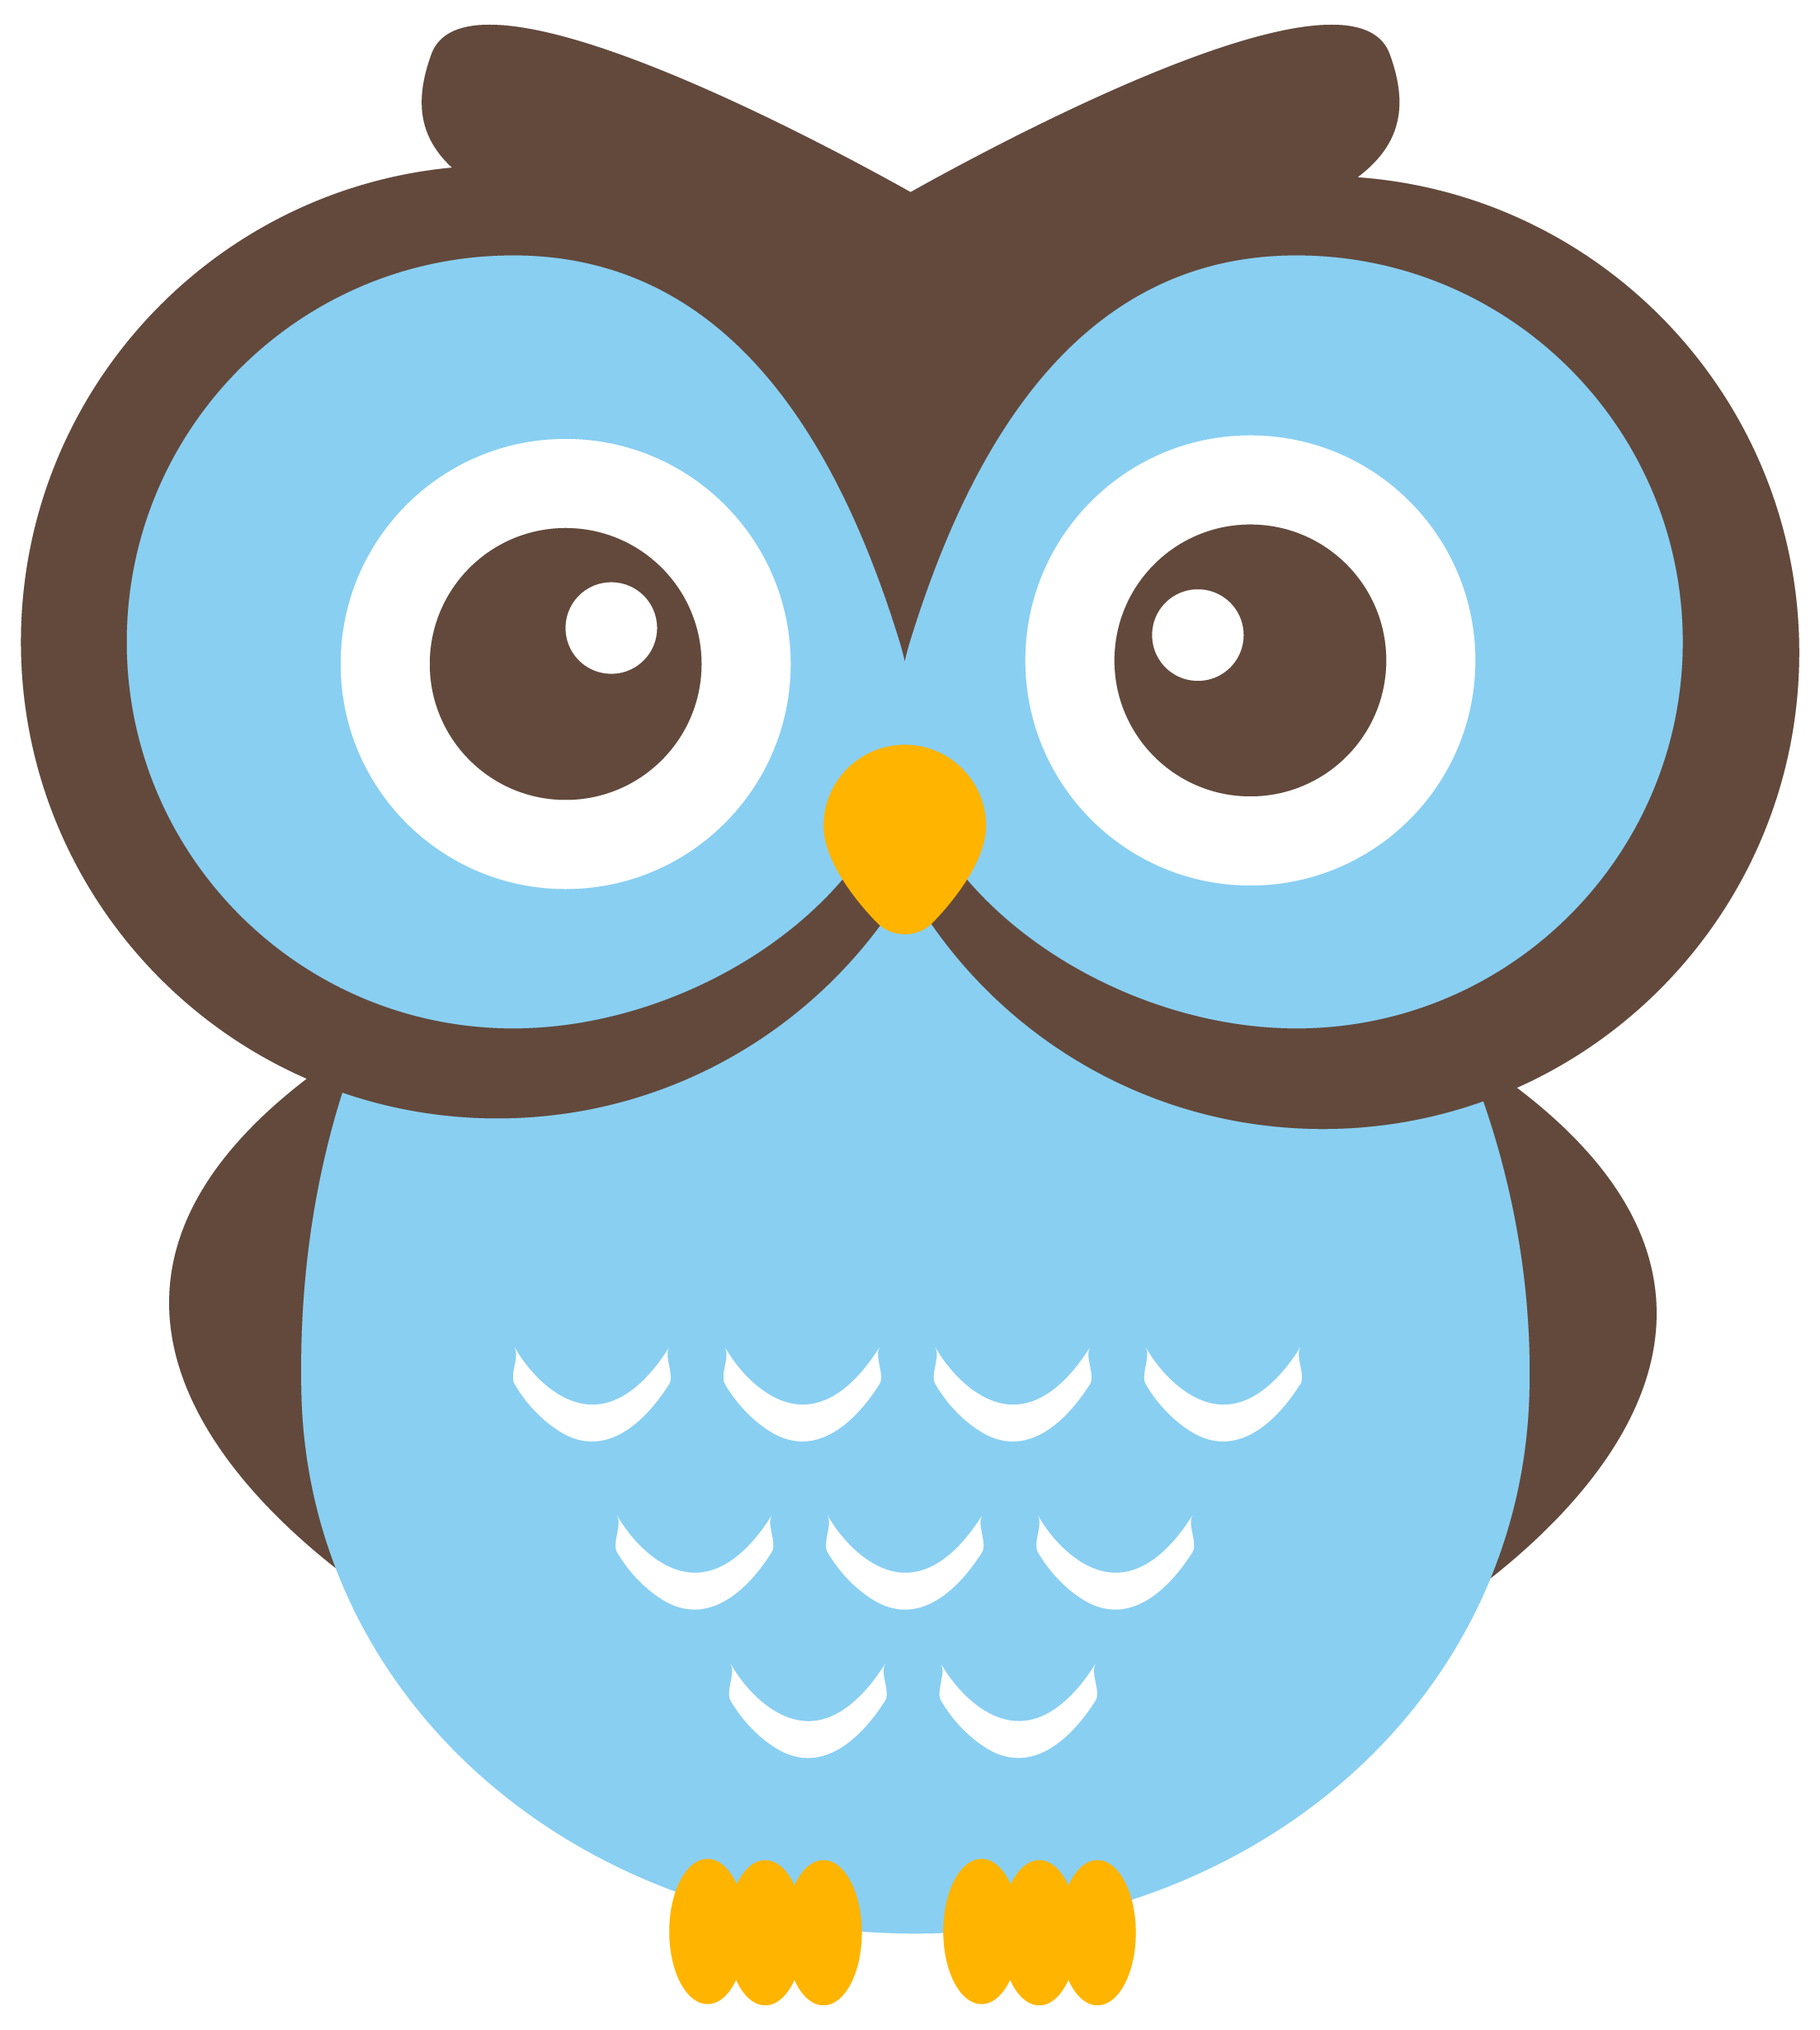 Cute Owl Clip Art At Clker Co